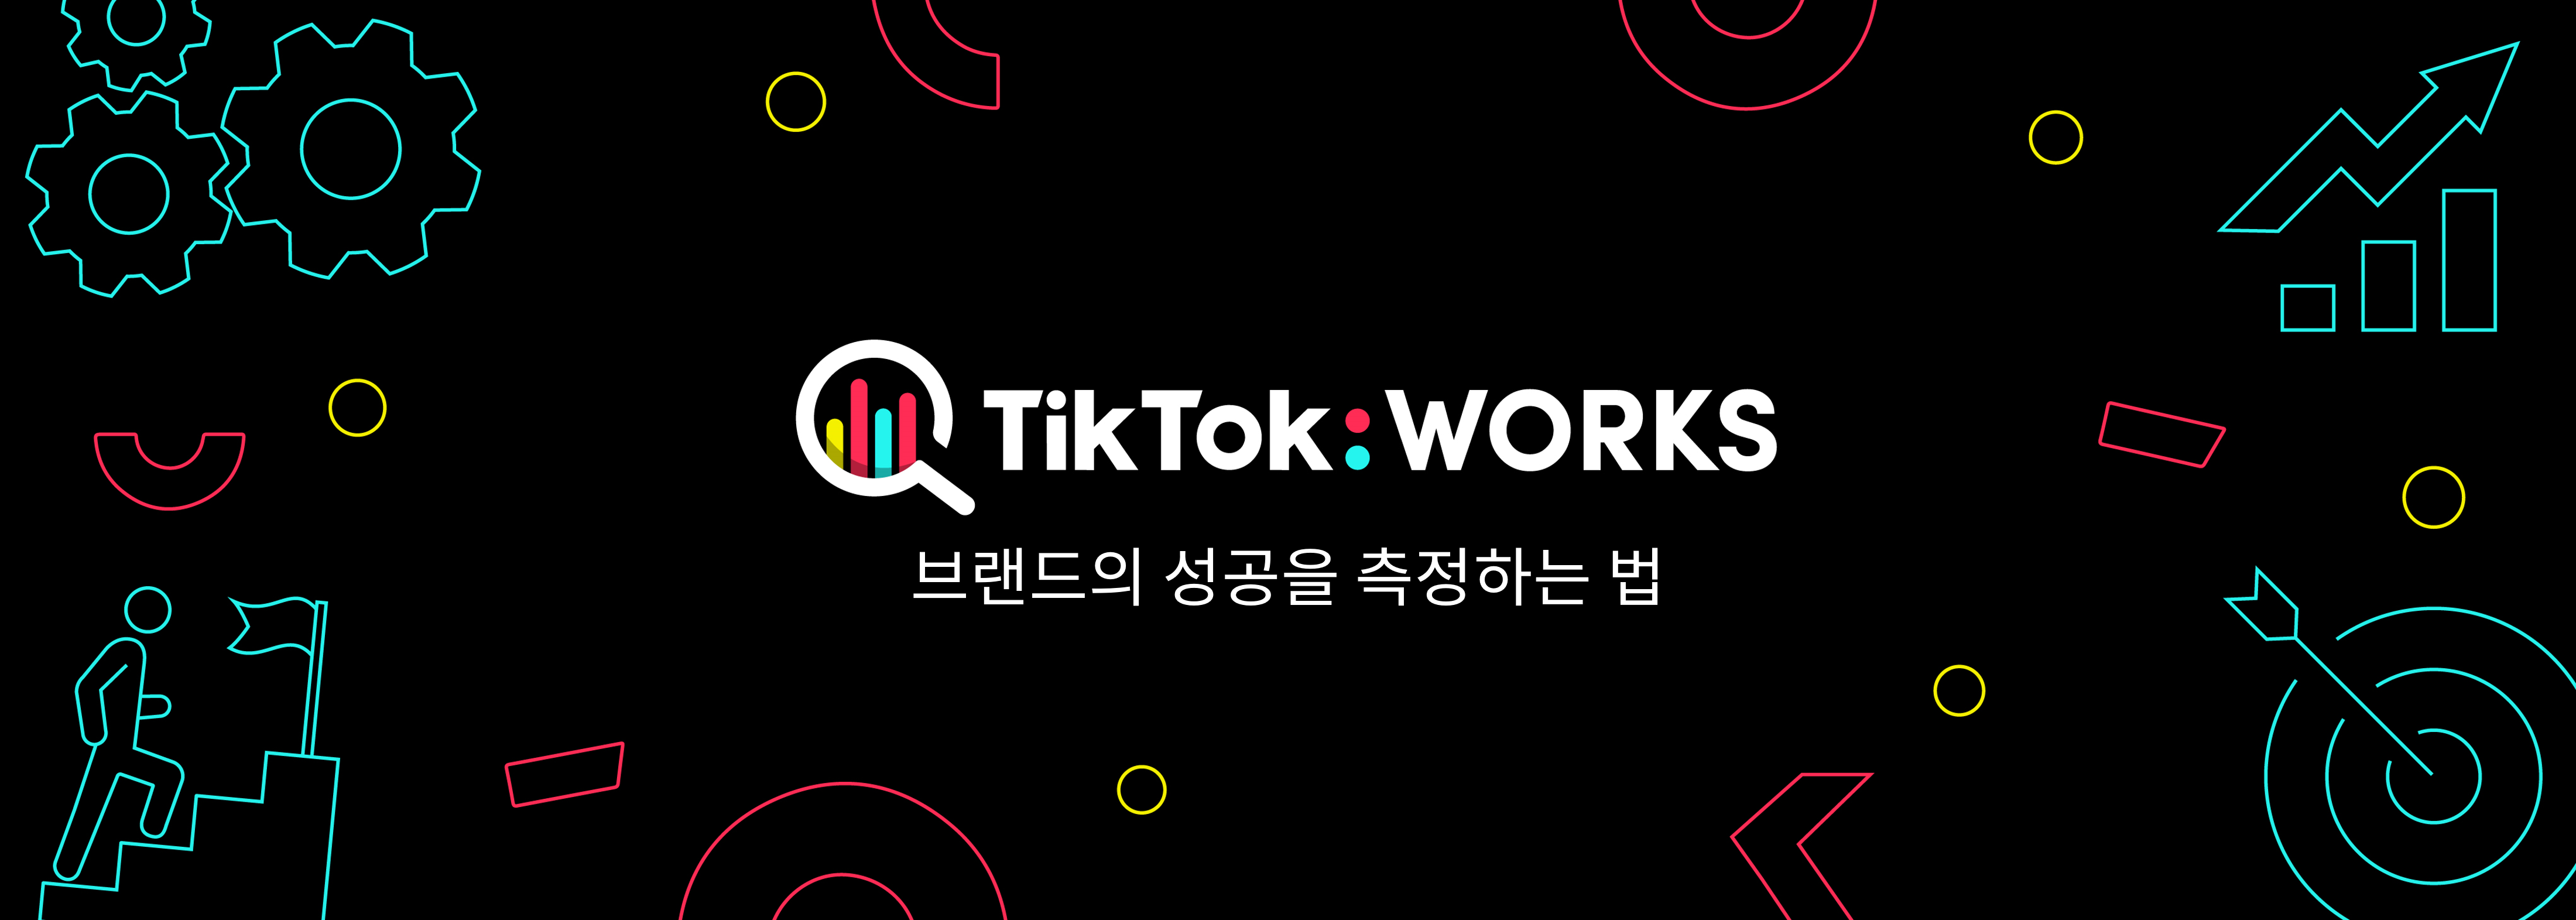 TikTok Works Cover